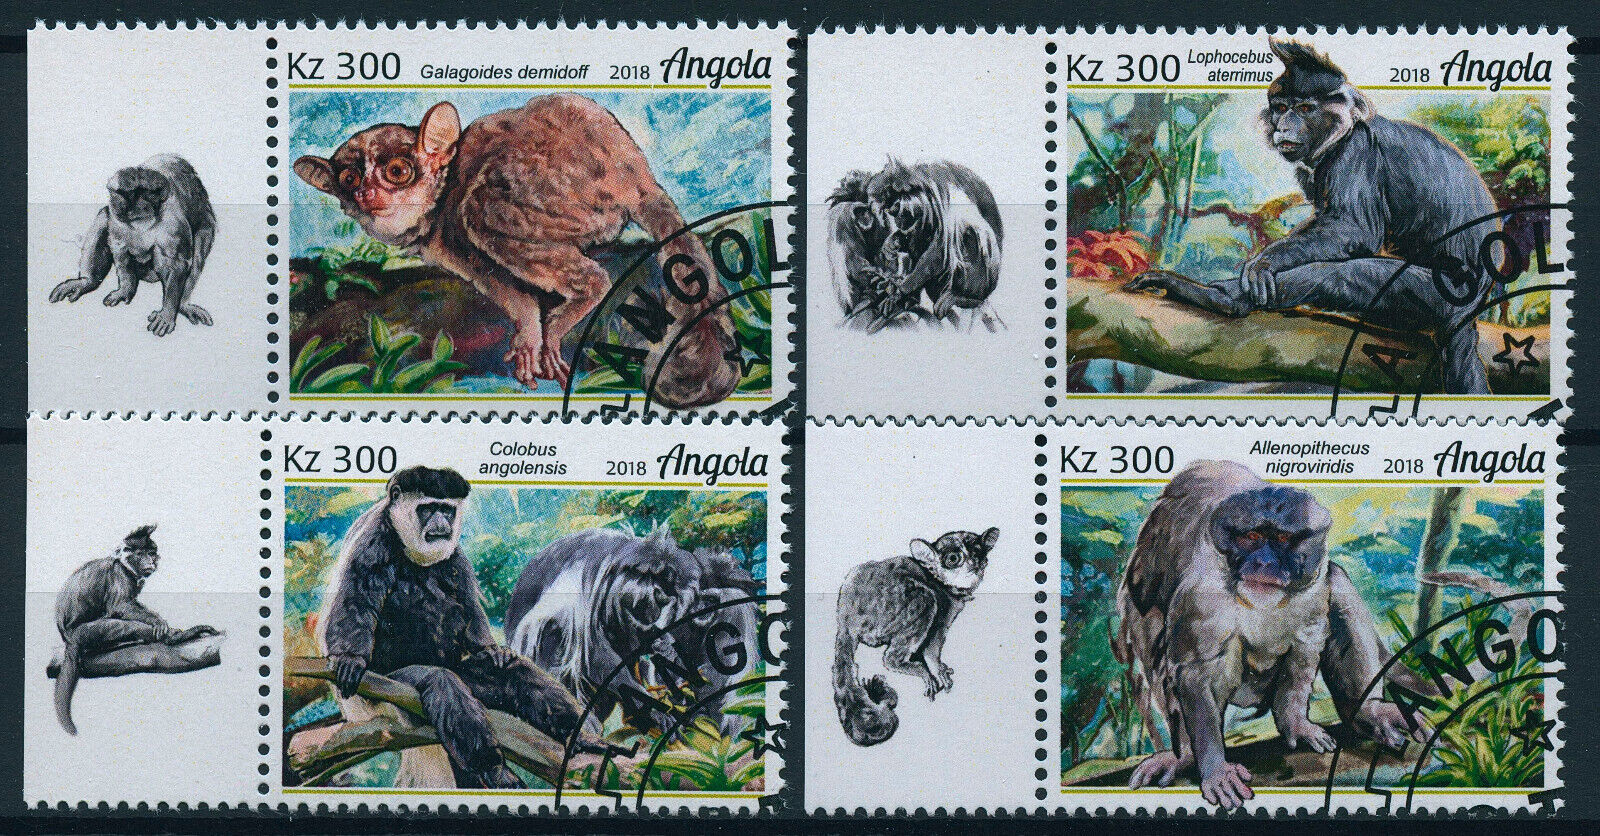 Angola 2018 CTO Wild Animals Stamps Primates Monkeys Bushbaby Mangabey 4v Set